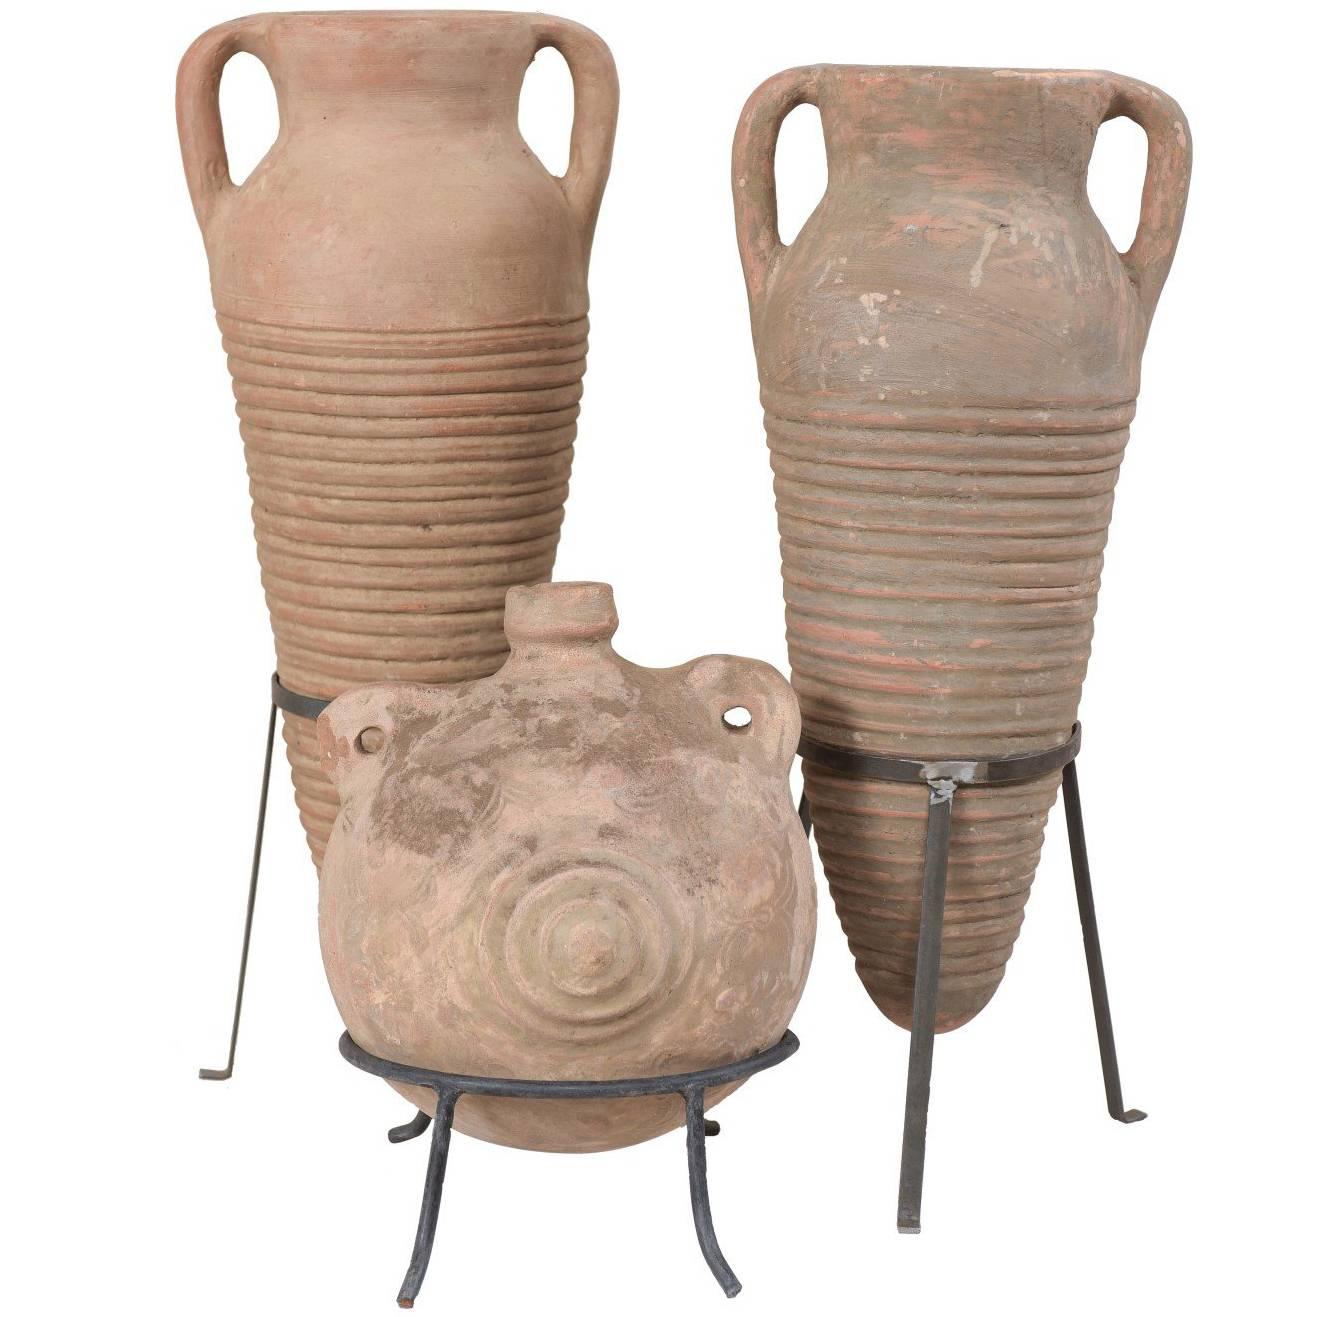 Collection de trois pots en terre cuite de style colonial espagnol méditerranéen en vente